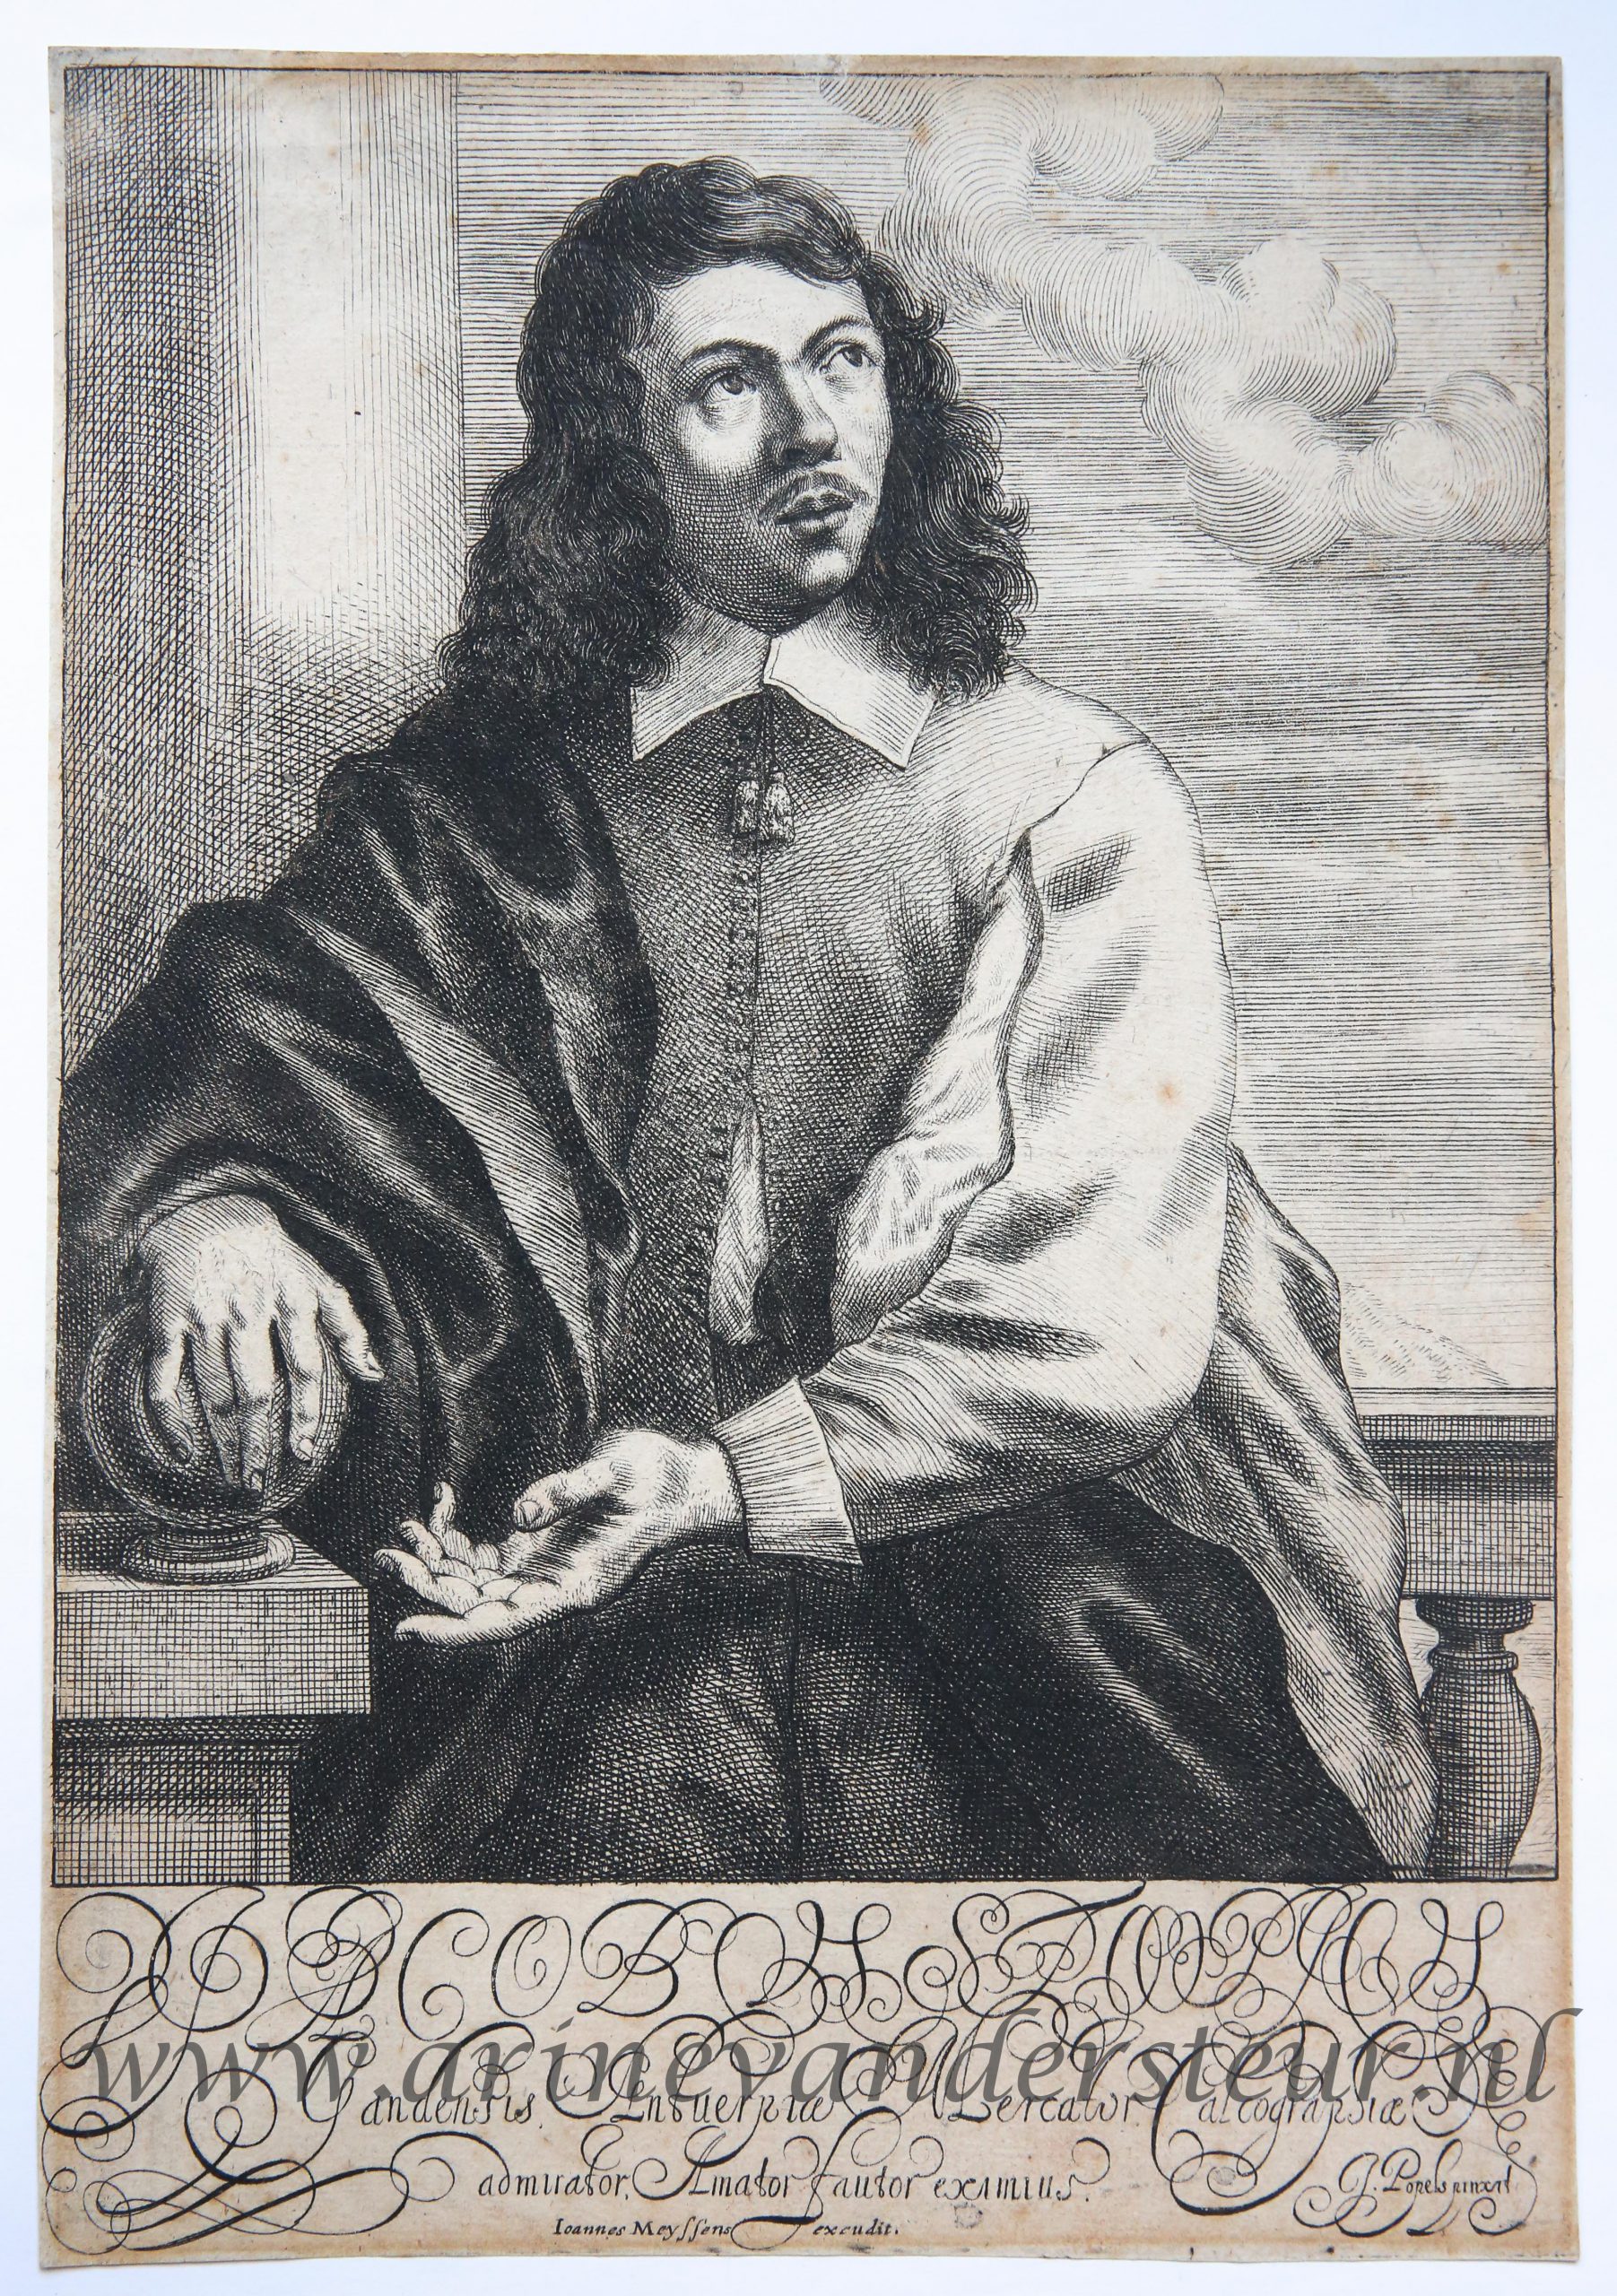 [Antique print, engraving/gravure] Portrait of Jacob Stoopius, published ca. 1630-1660.